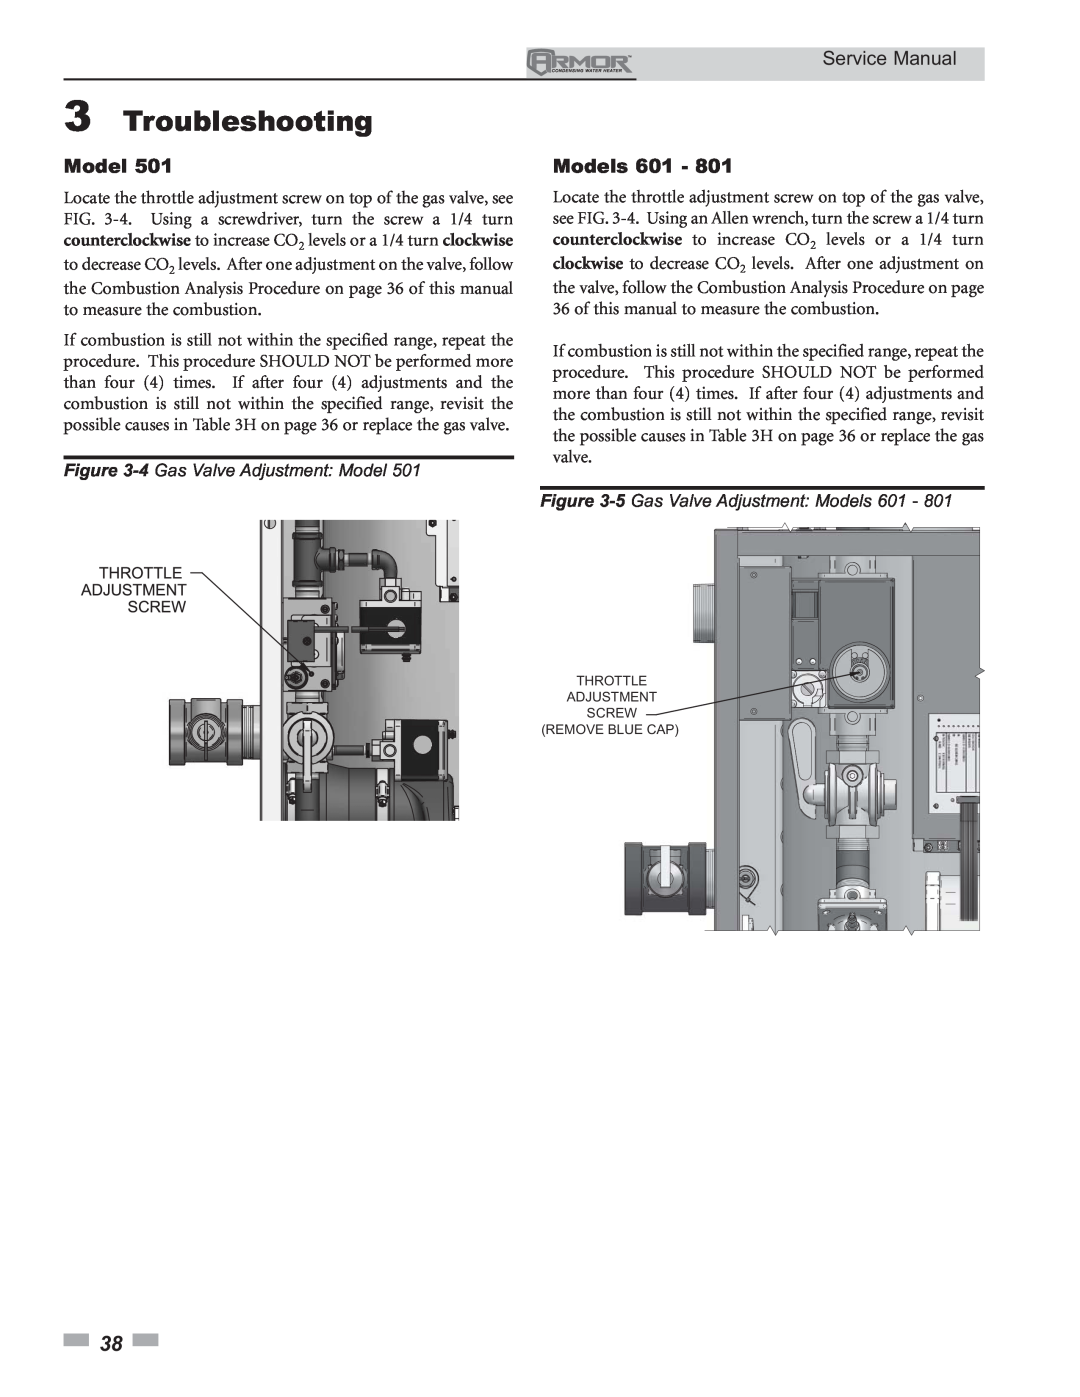 Lochinvar 151 - 801 service manual 4 Gas Valve Adjustment Model, 5 Gas Valve Adjustment Models, 3Troubleshooting 